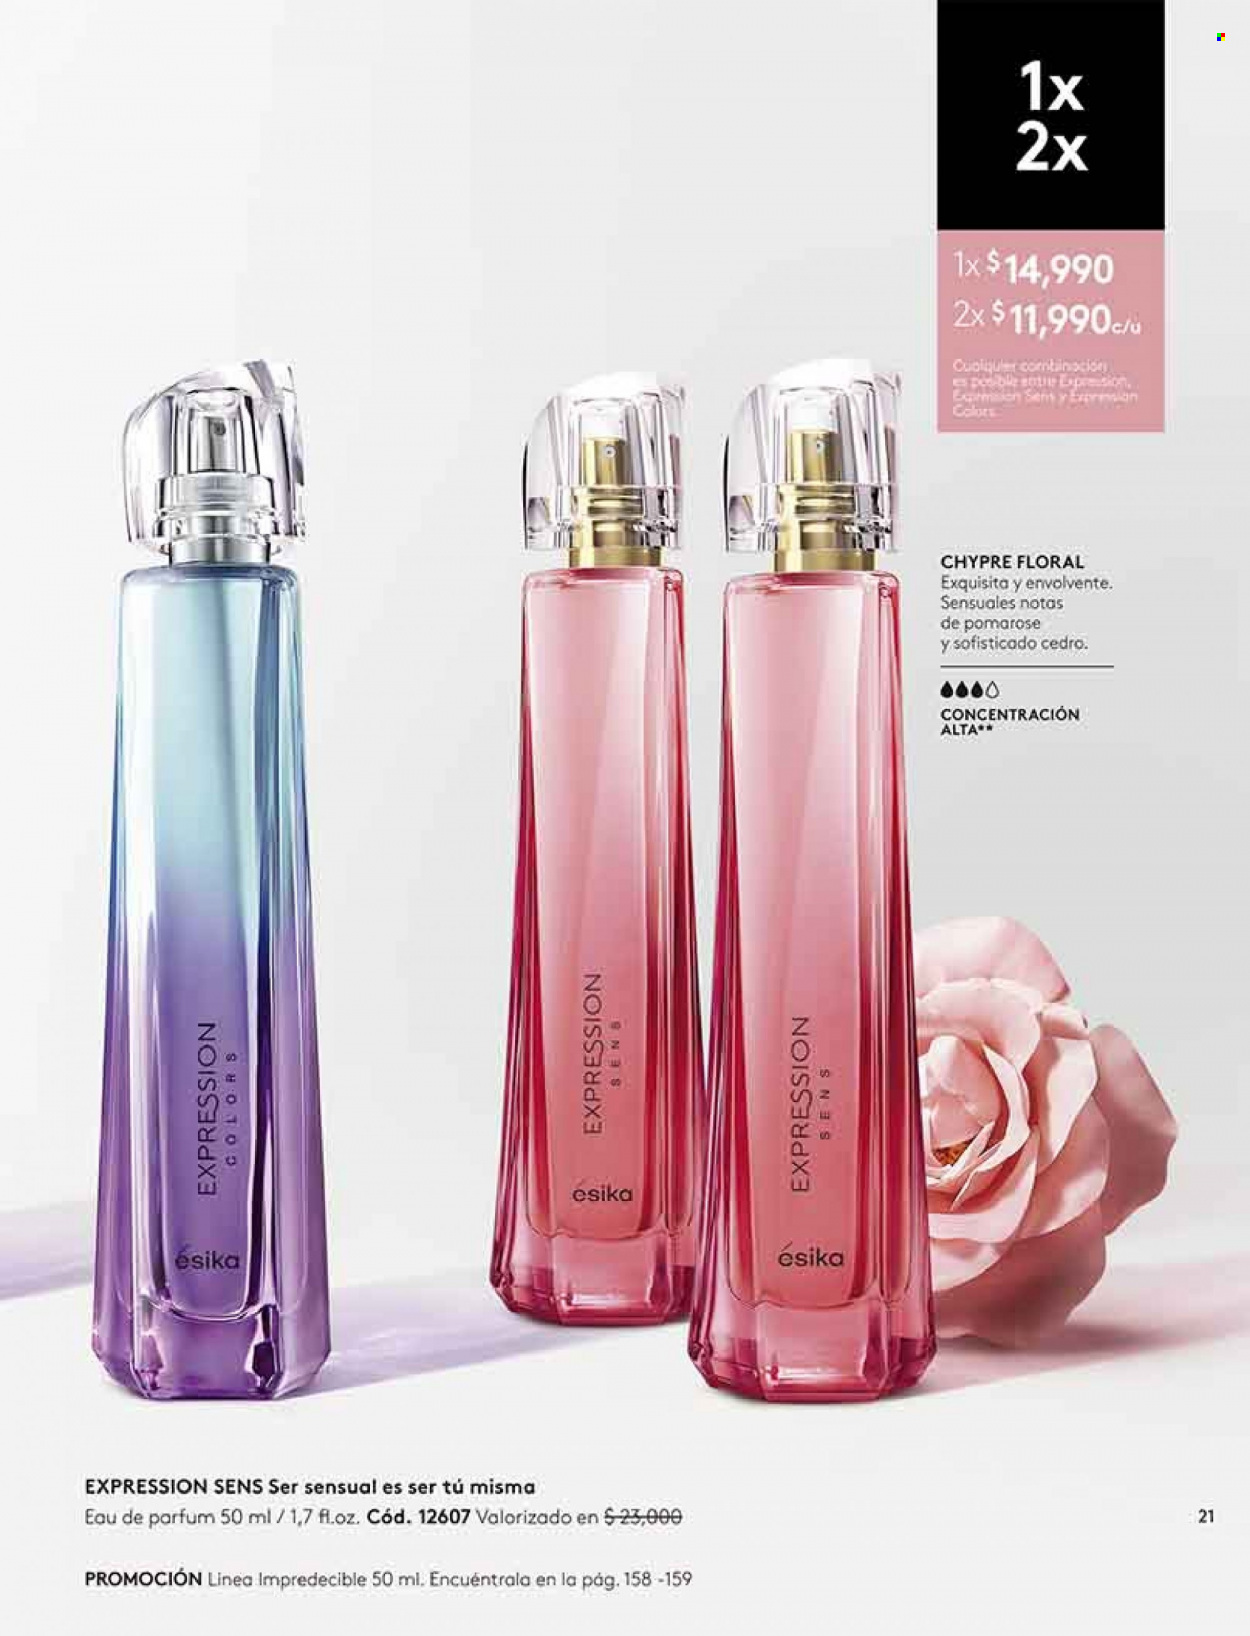 Catálogo Ésika - Ventas - perfume. Página 21.